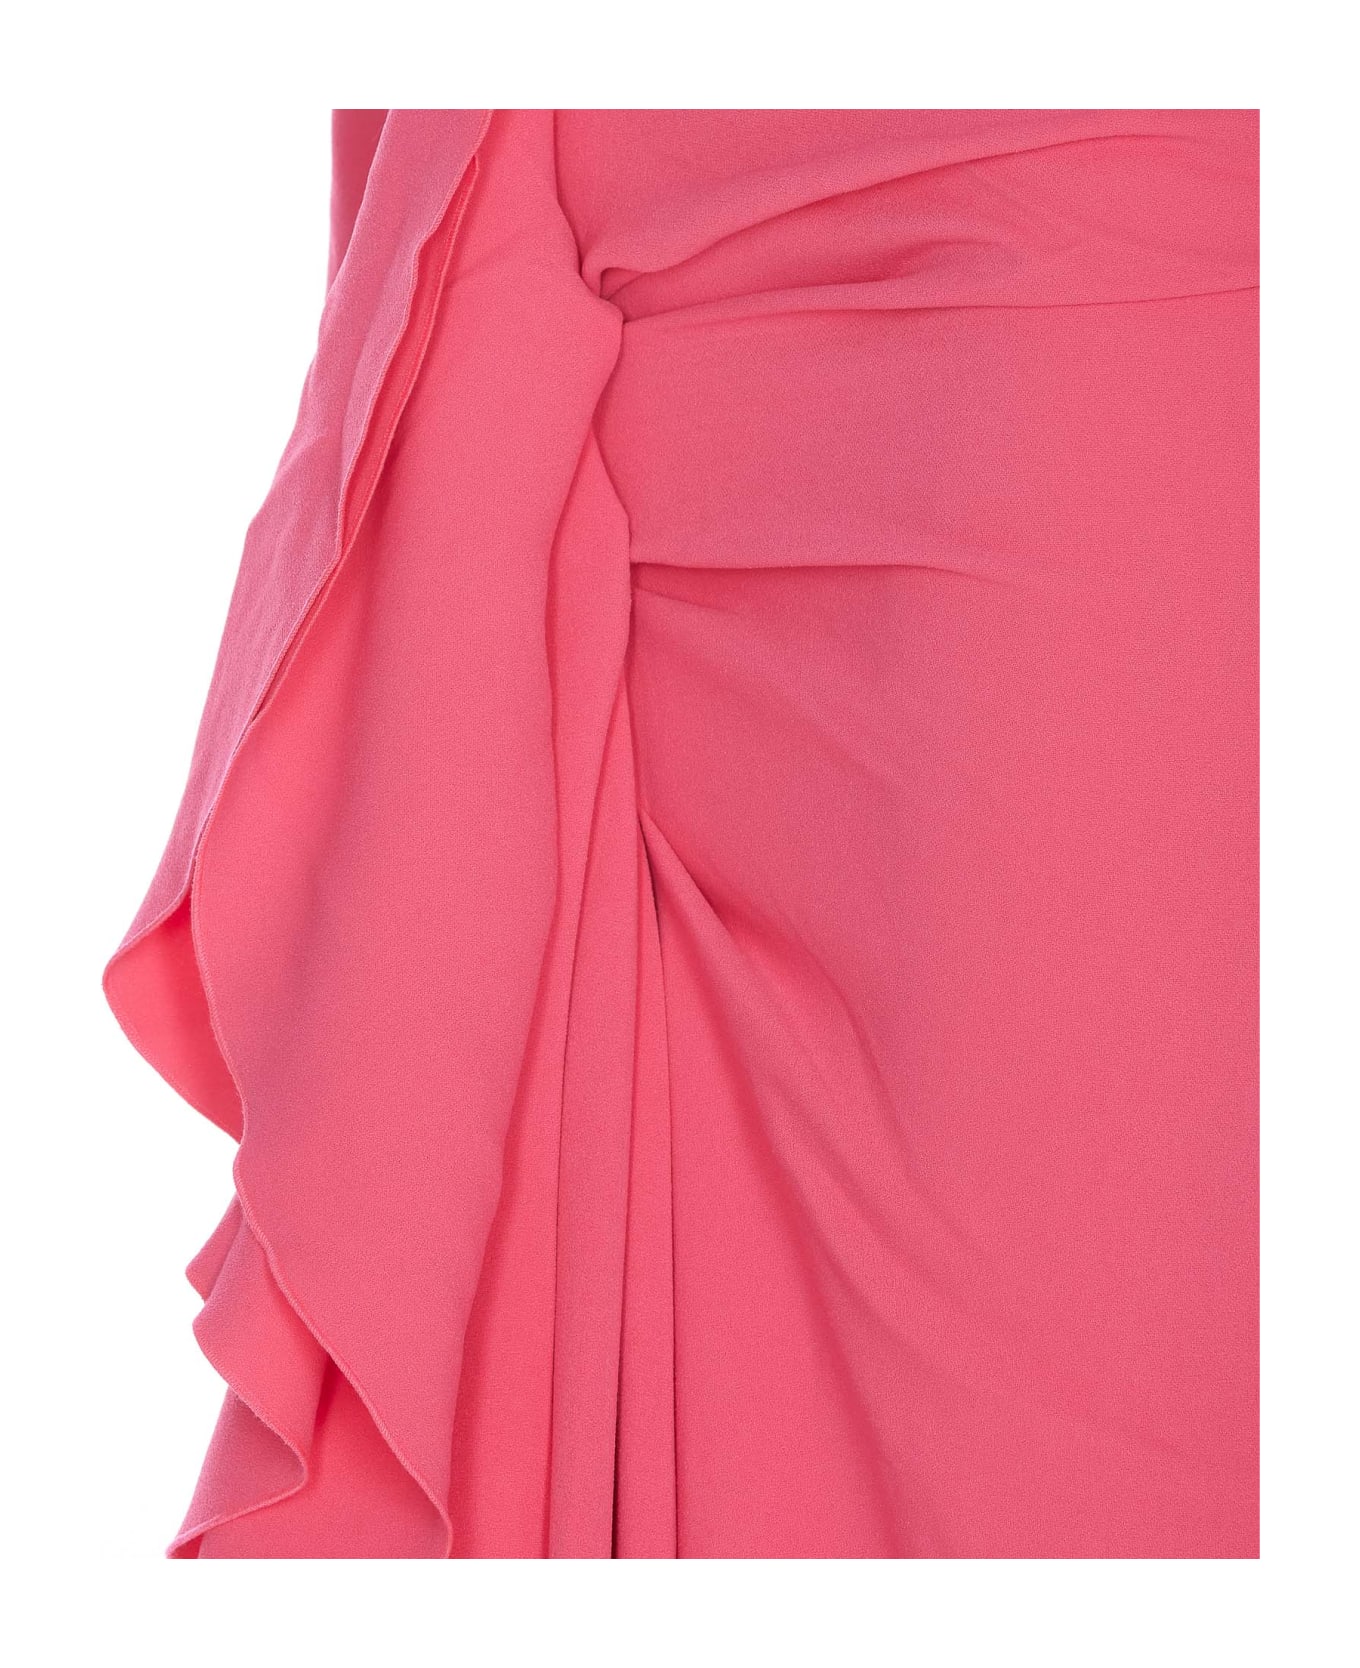 Solace London Nia Maxi Dress - Strawberry ワンピース＆ドレス